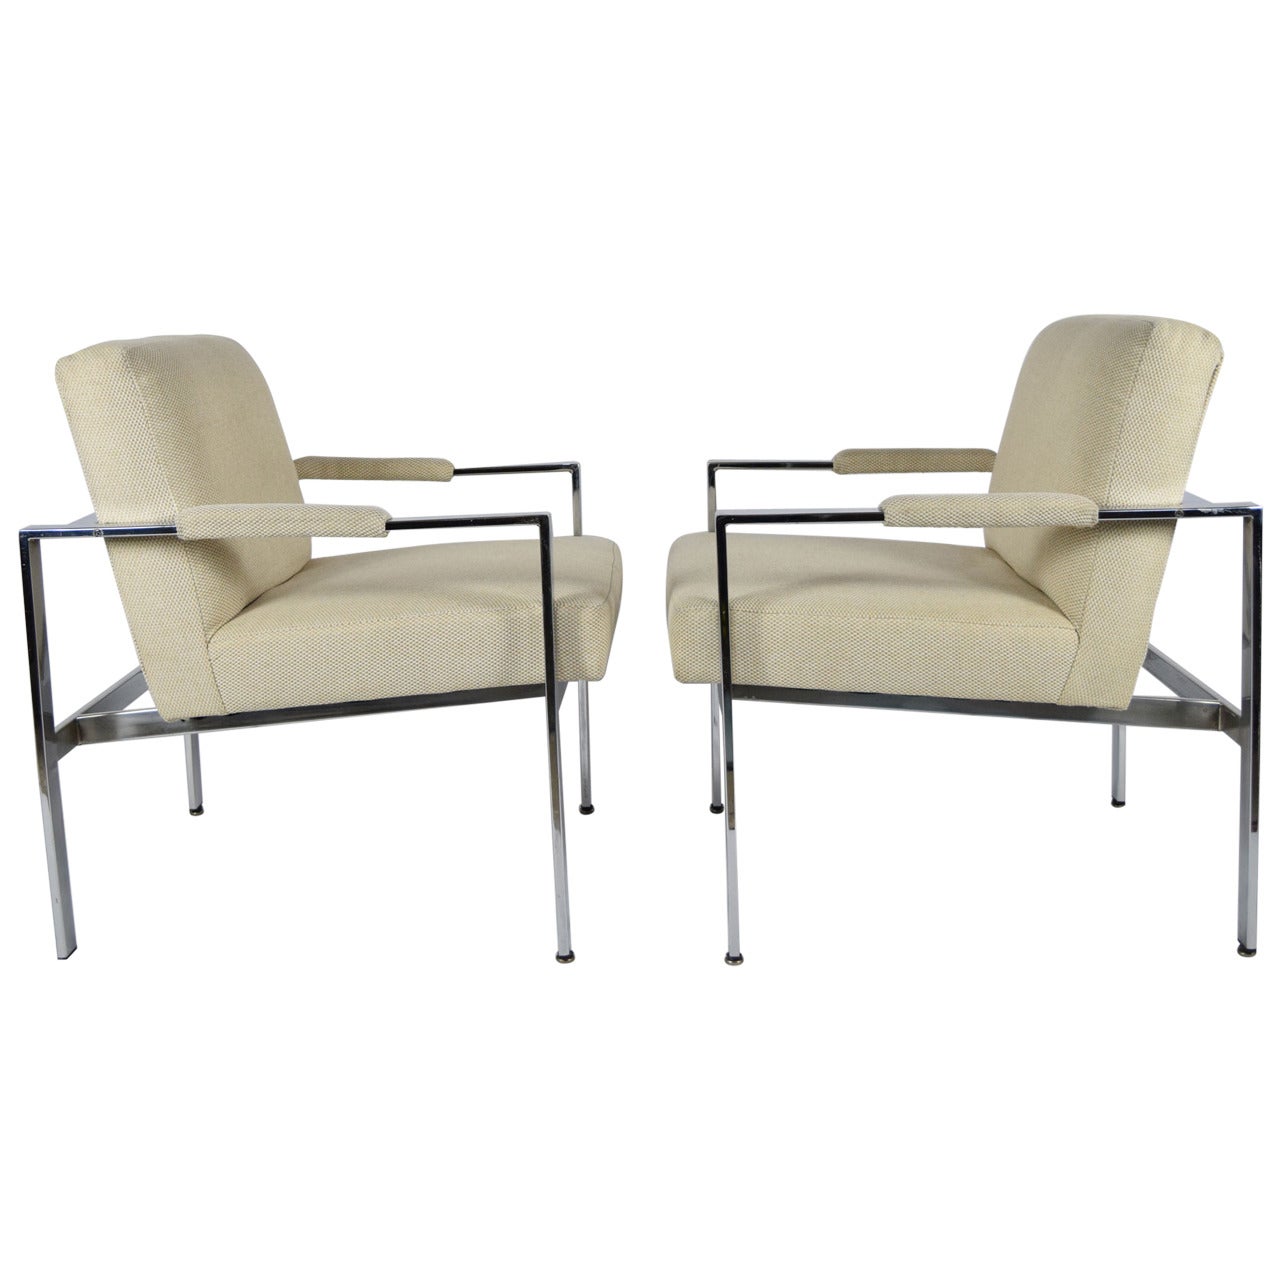 Pair of Milo Baughman Chrome Frame Lounge Chairs